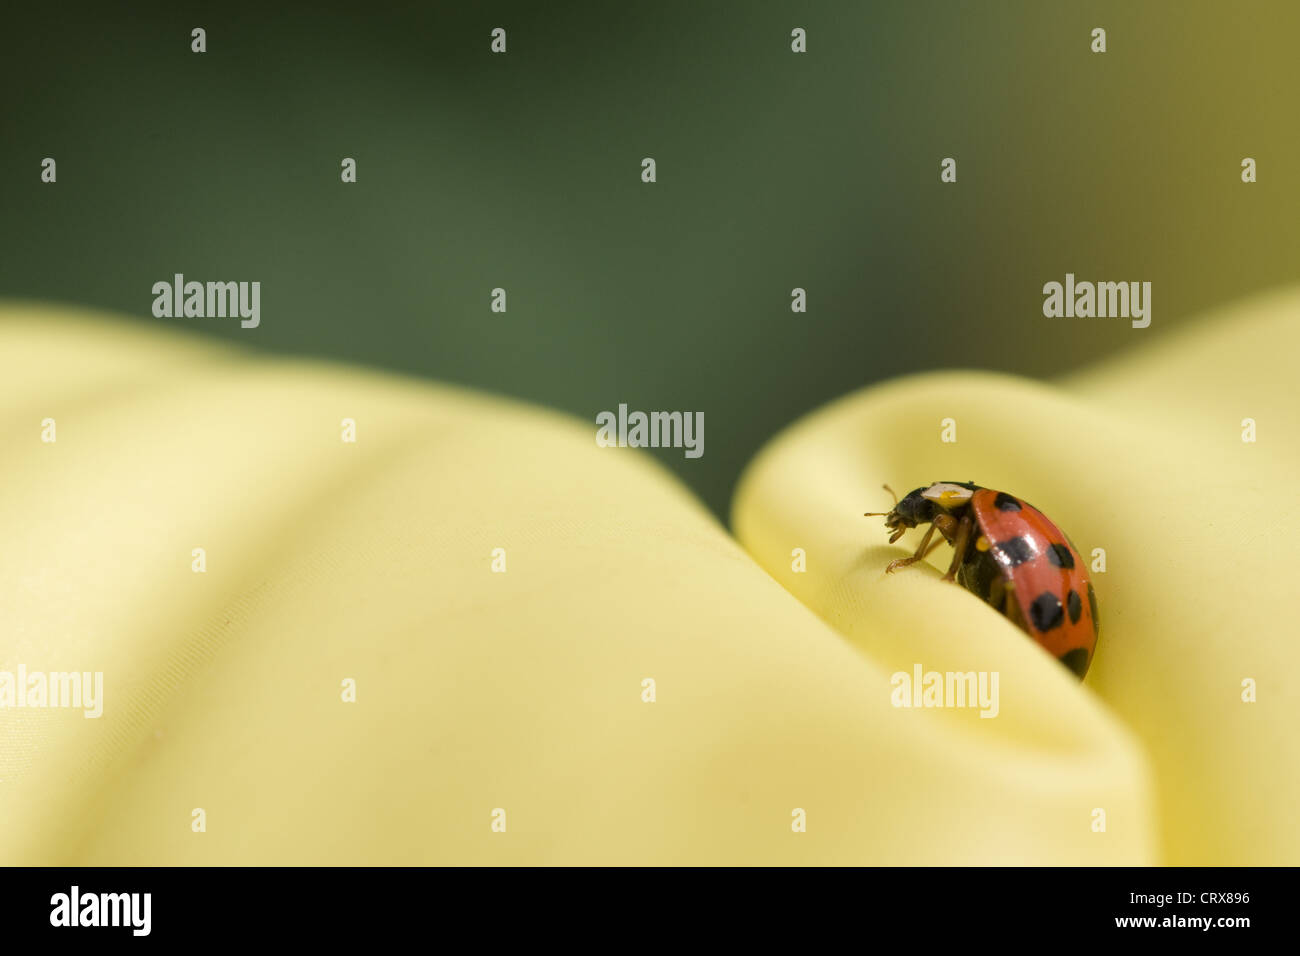 close up ladybug on green and yellow background Stock Photo